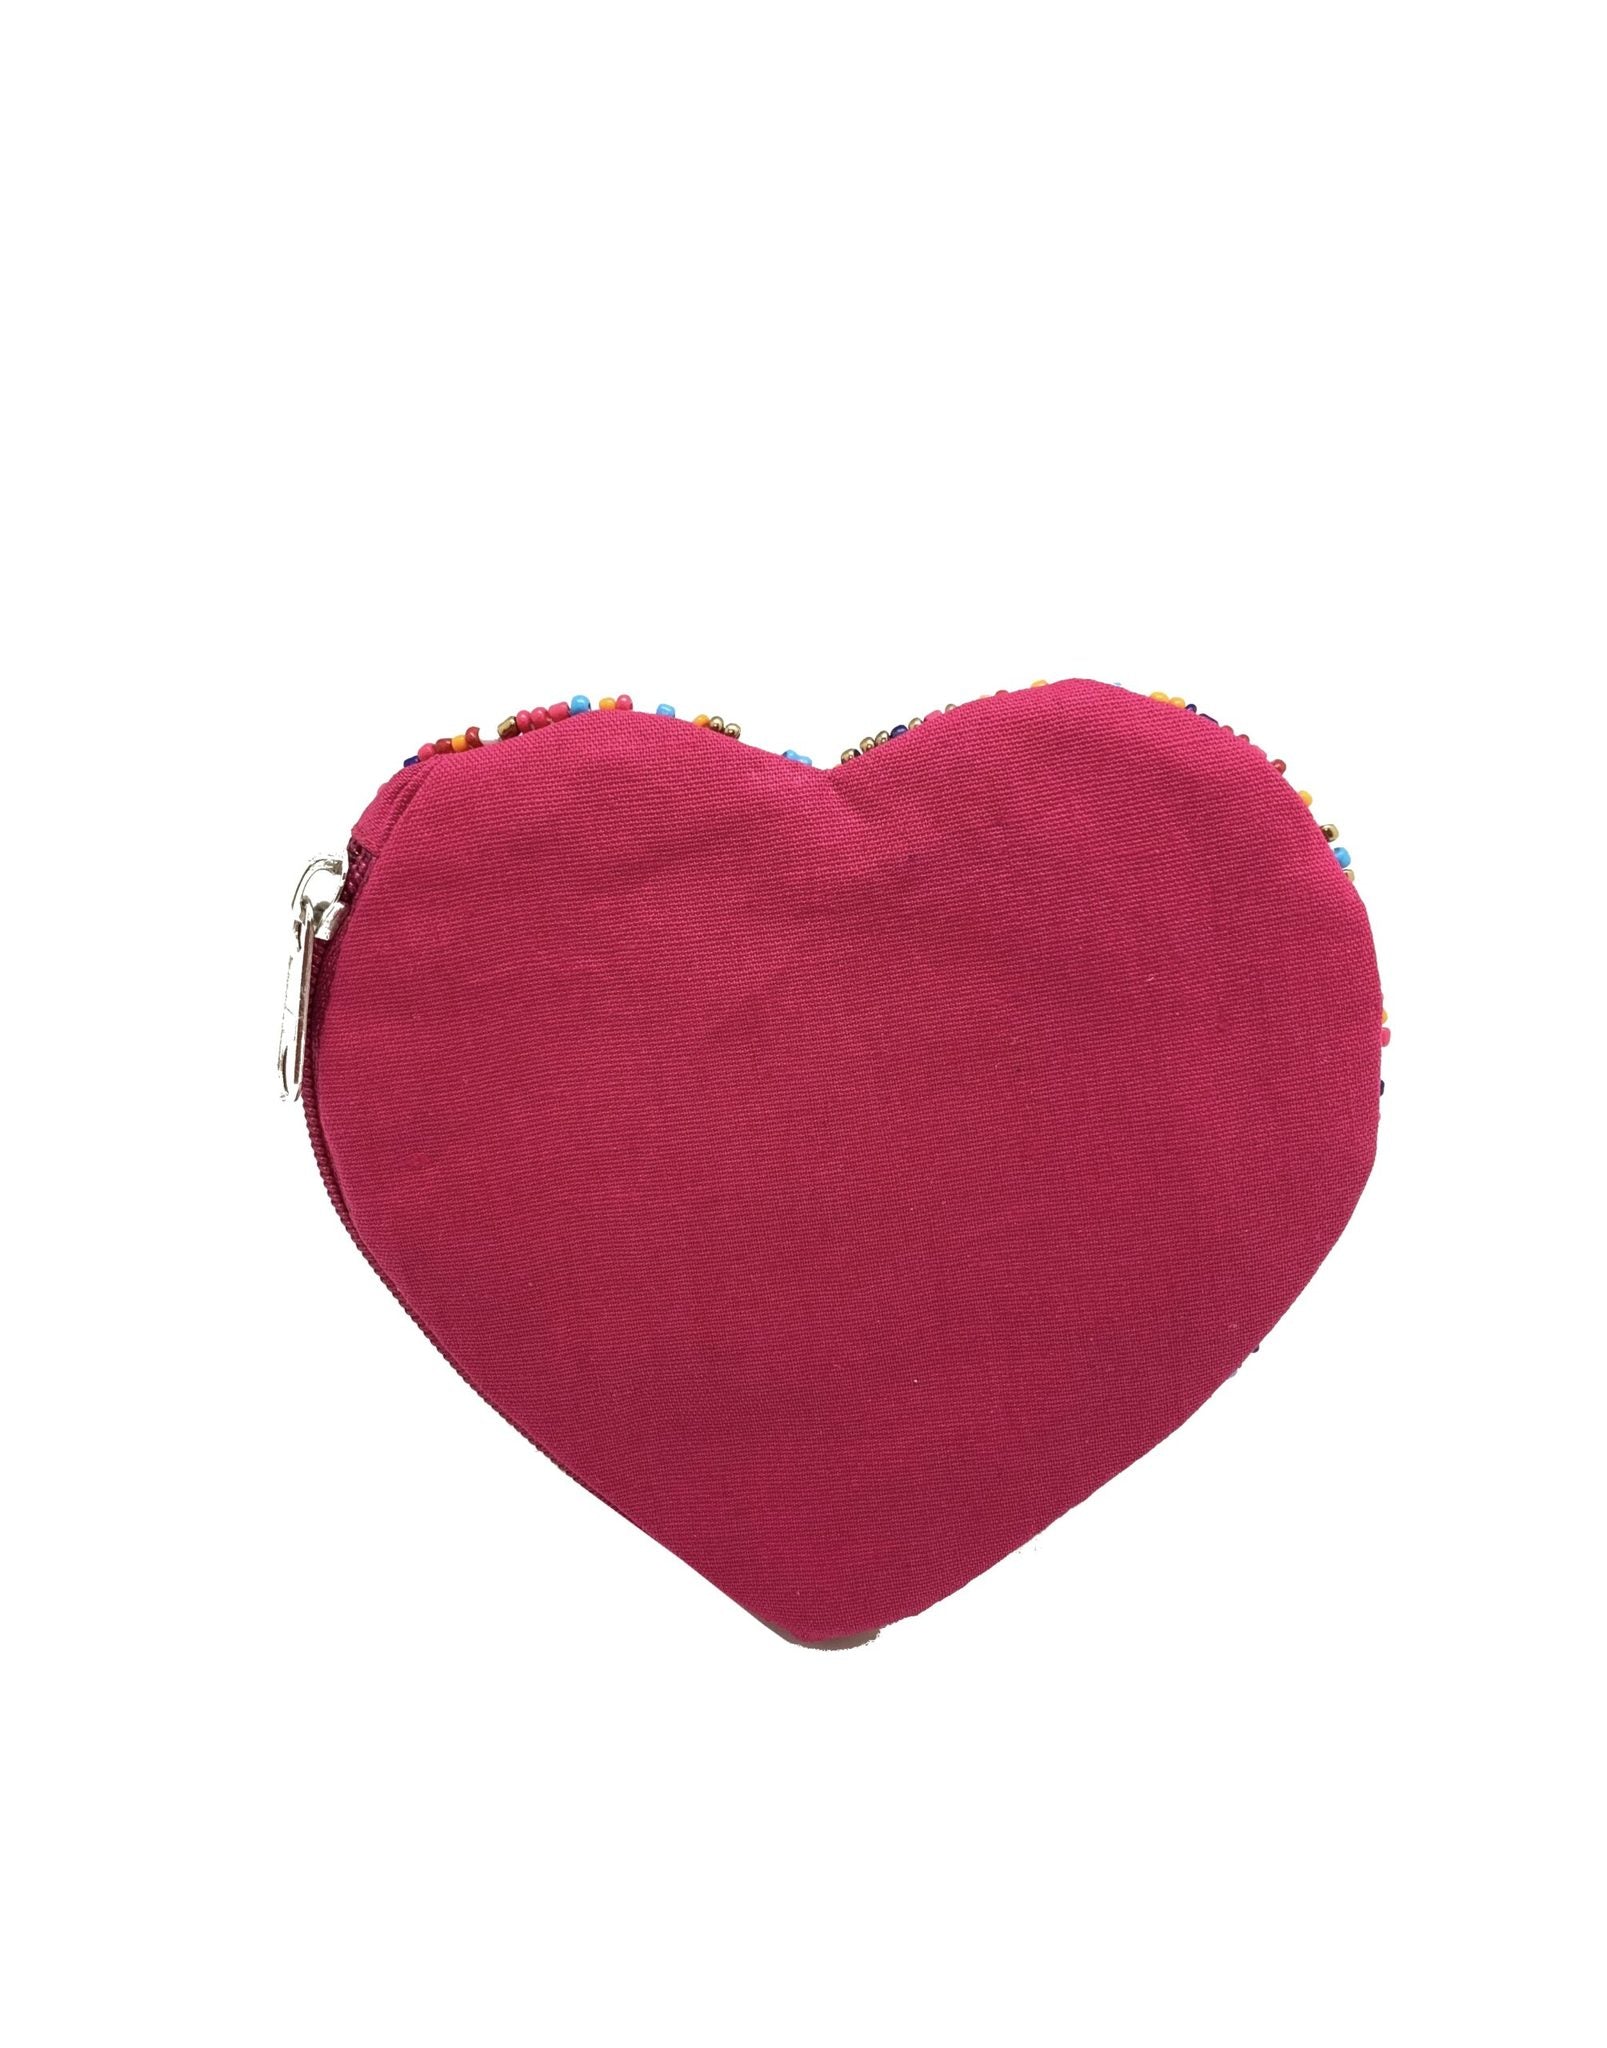 XOXO Glass Beaded Heart Zipper Pouch